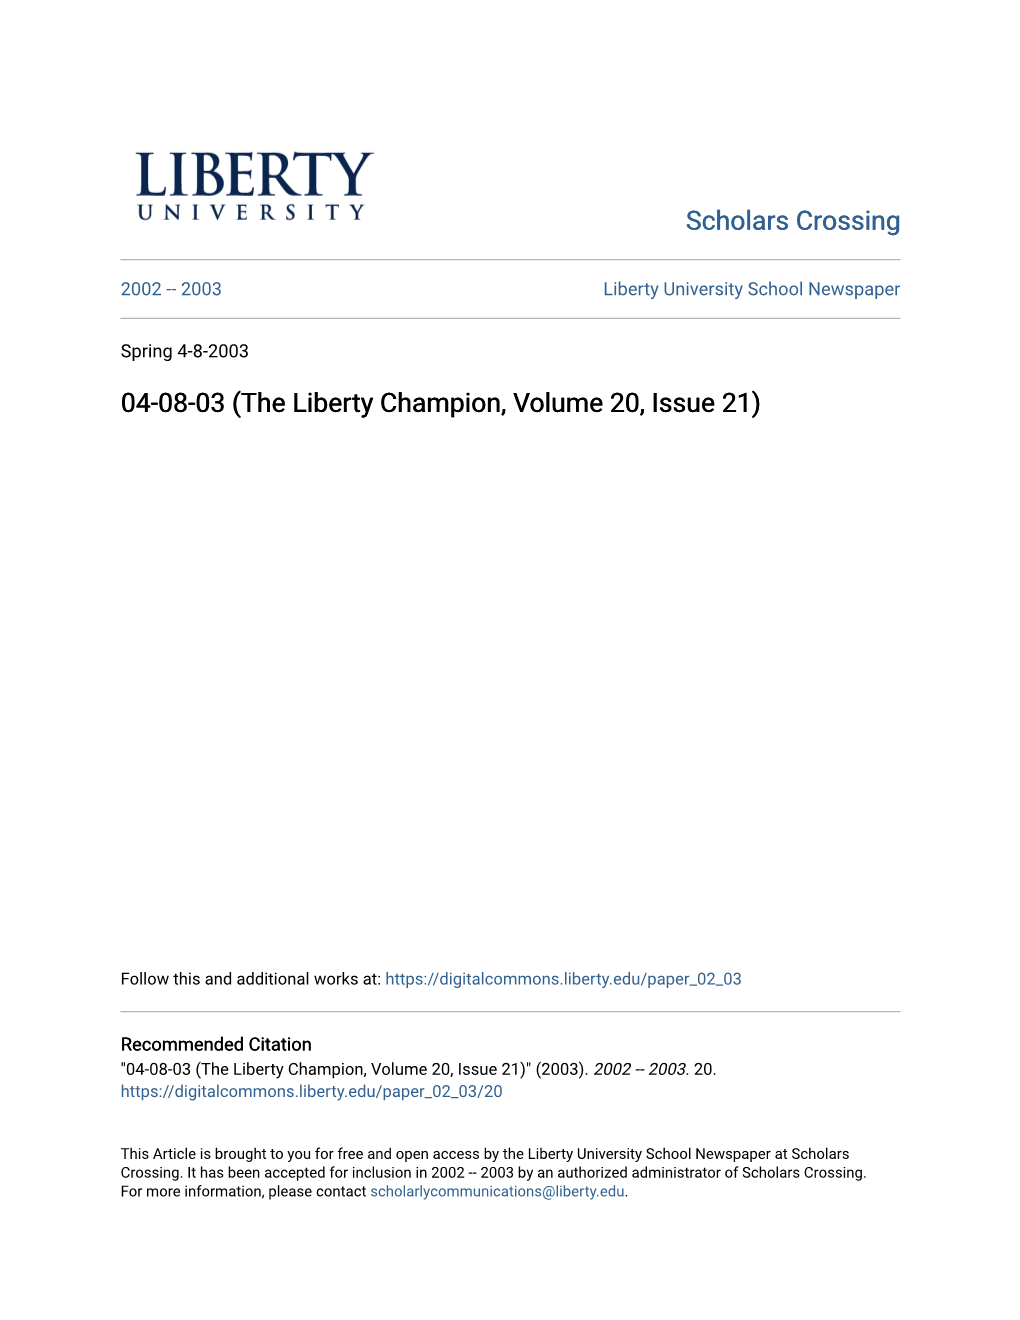 04-08-03 (The Liberty Champion, Volume 20, Issue 21)